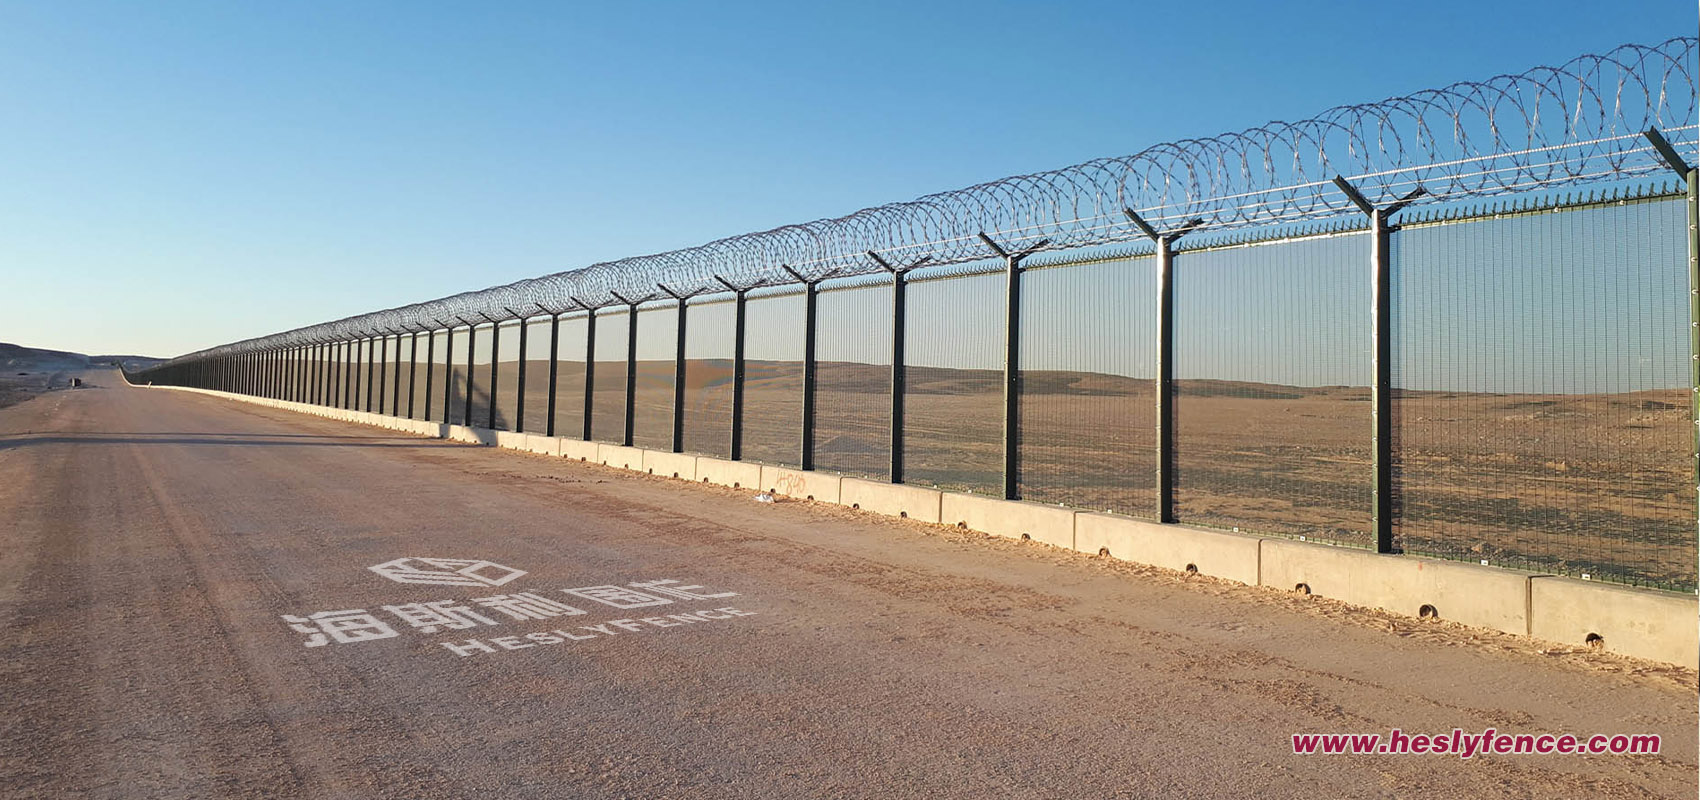 prisons fencing